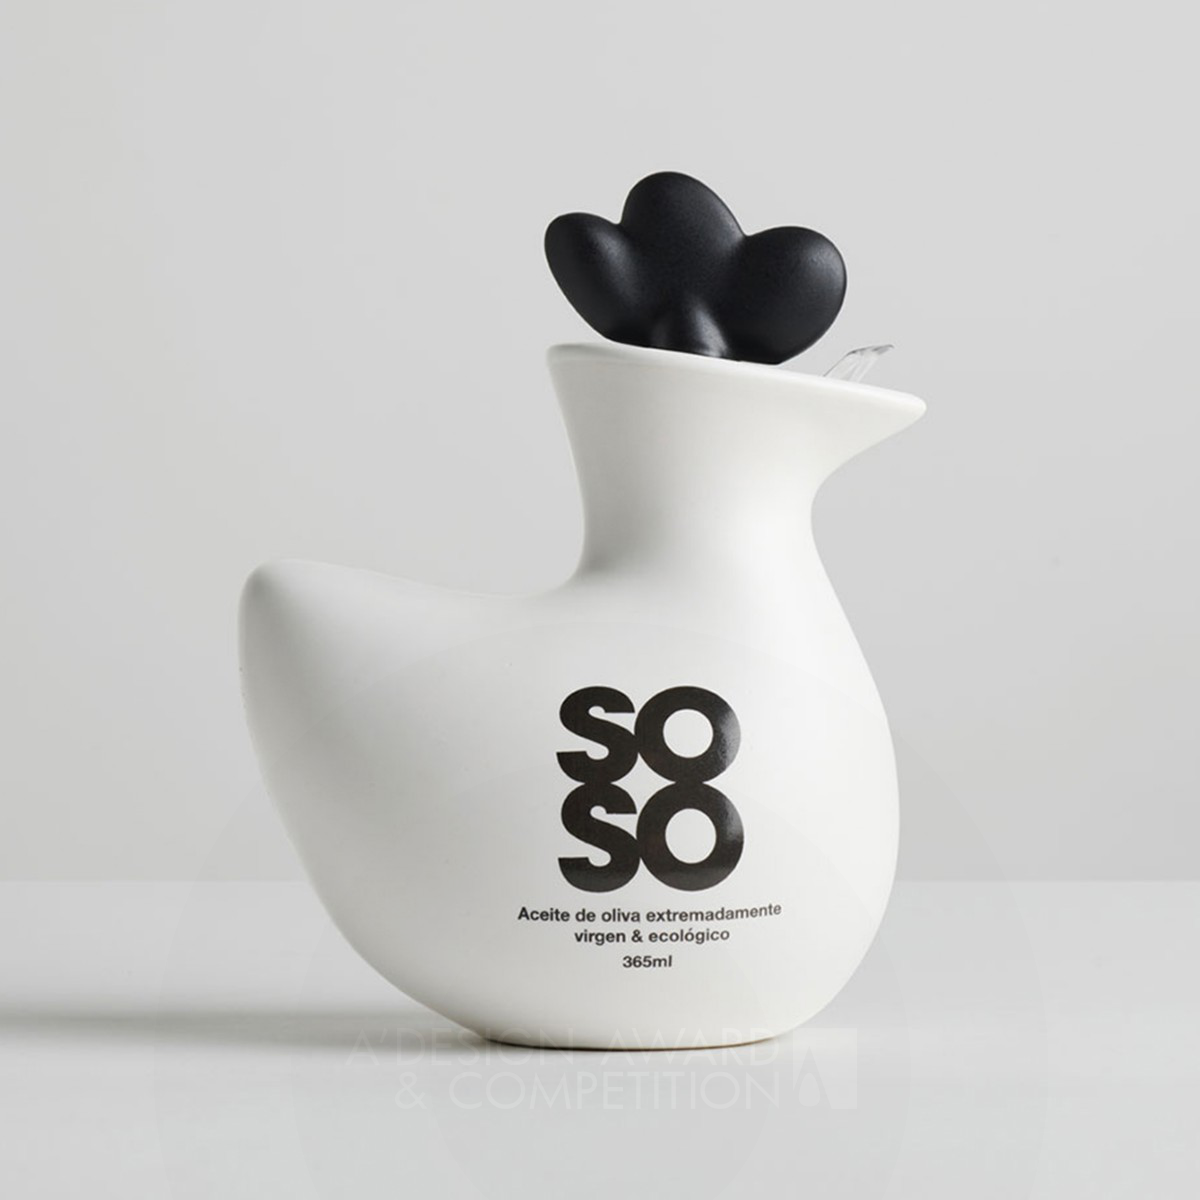 Bernardo Díaz López wins Silver at the prestigious A' Packaging Design Award with Hen Olive Oil Dispenser.